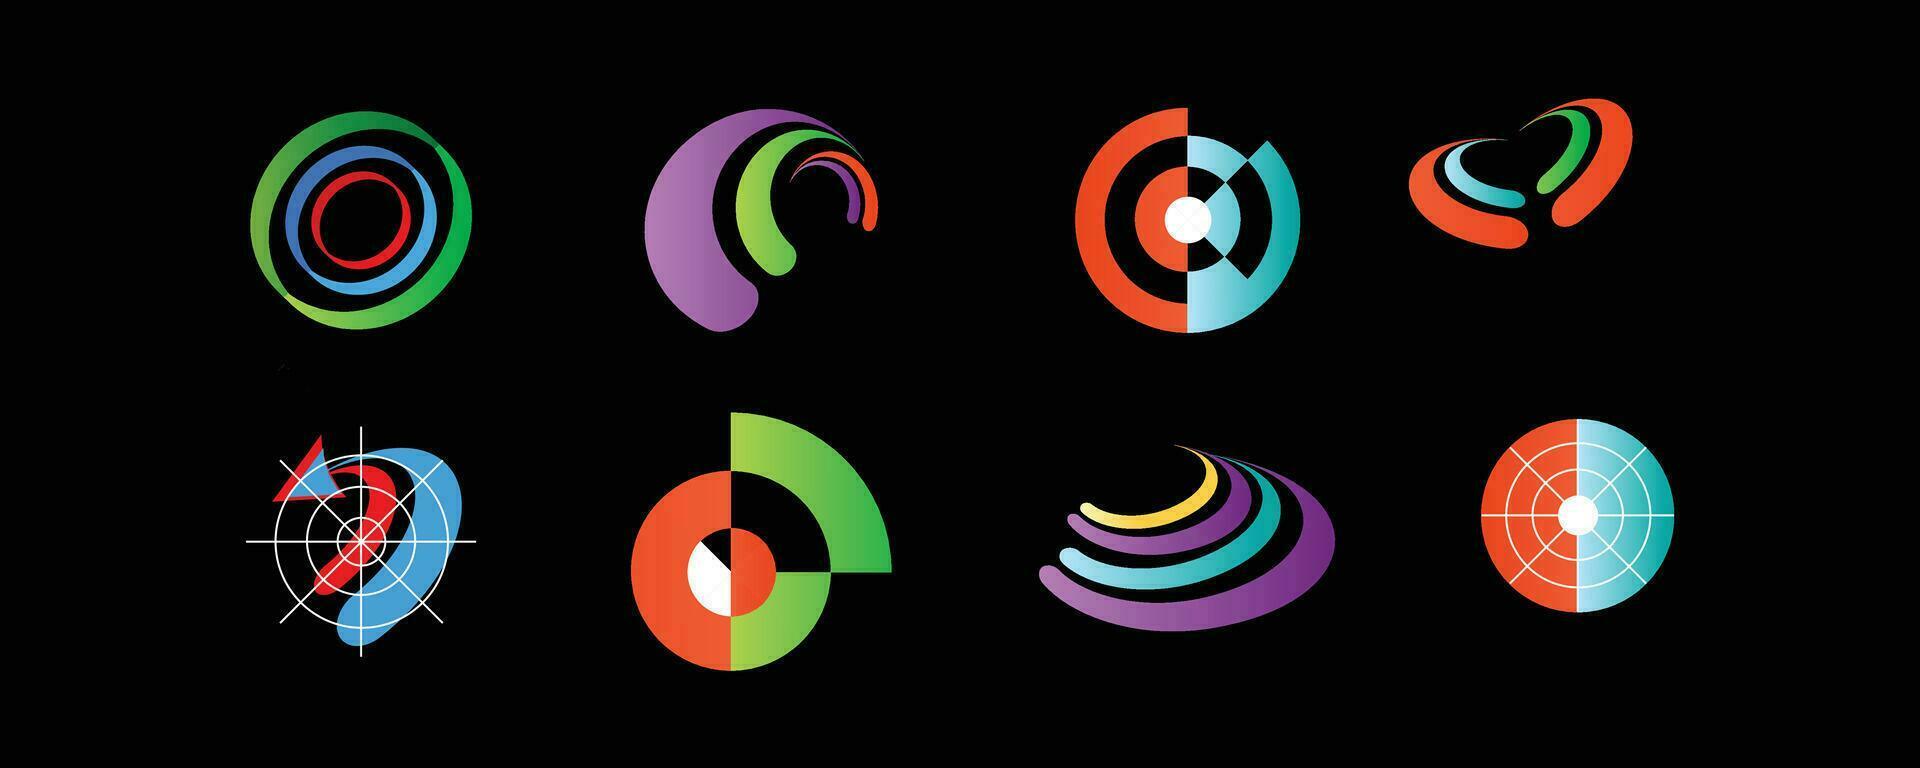 abstract logo reeks mordern techno ontwerp vector